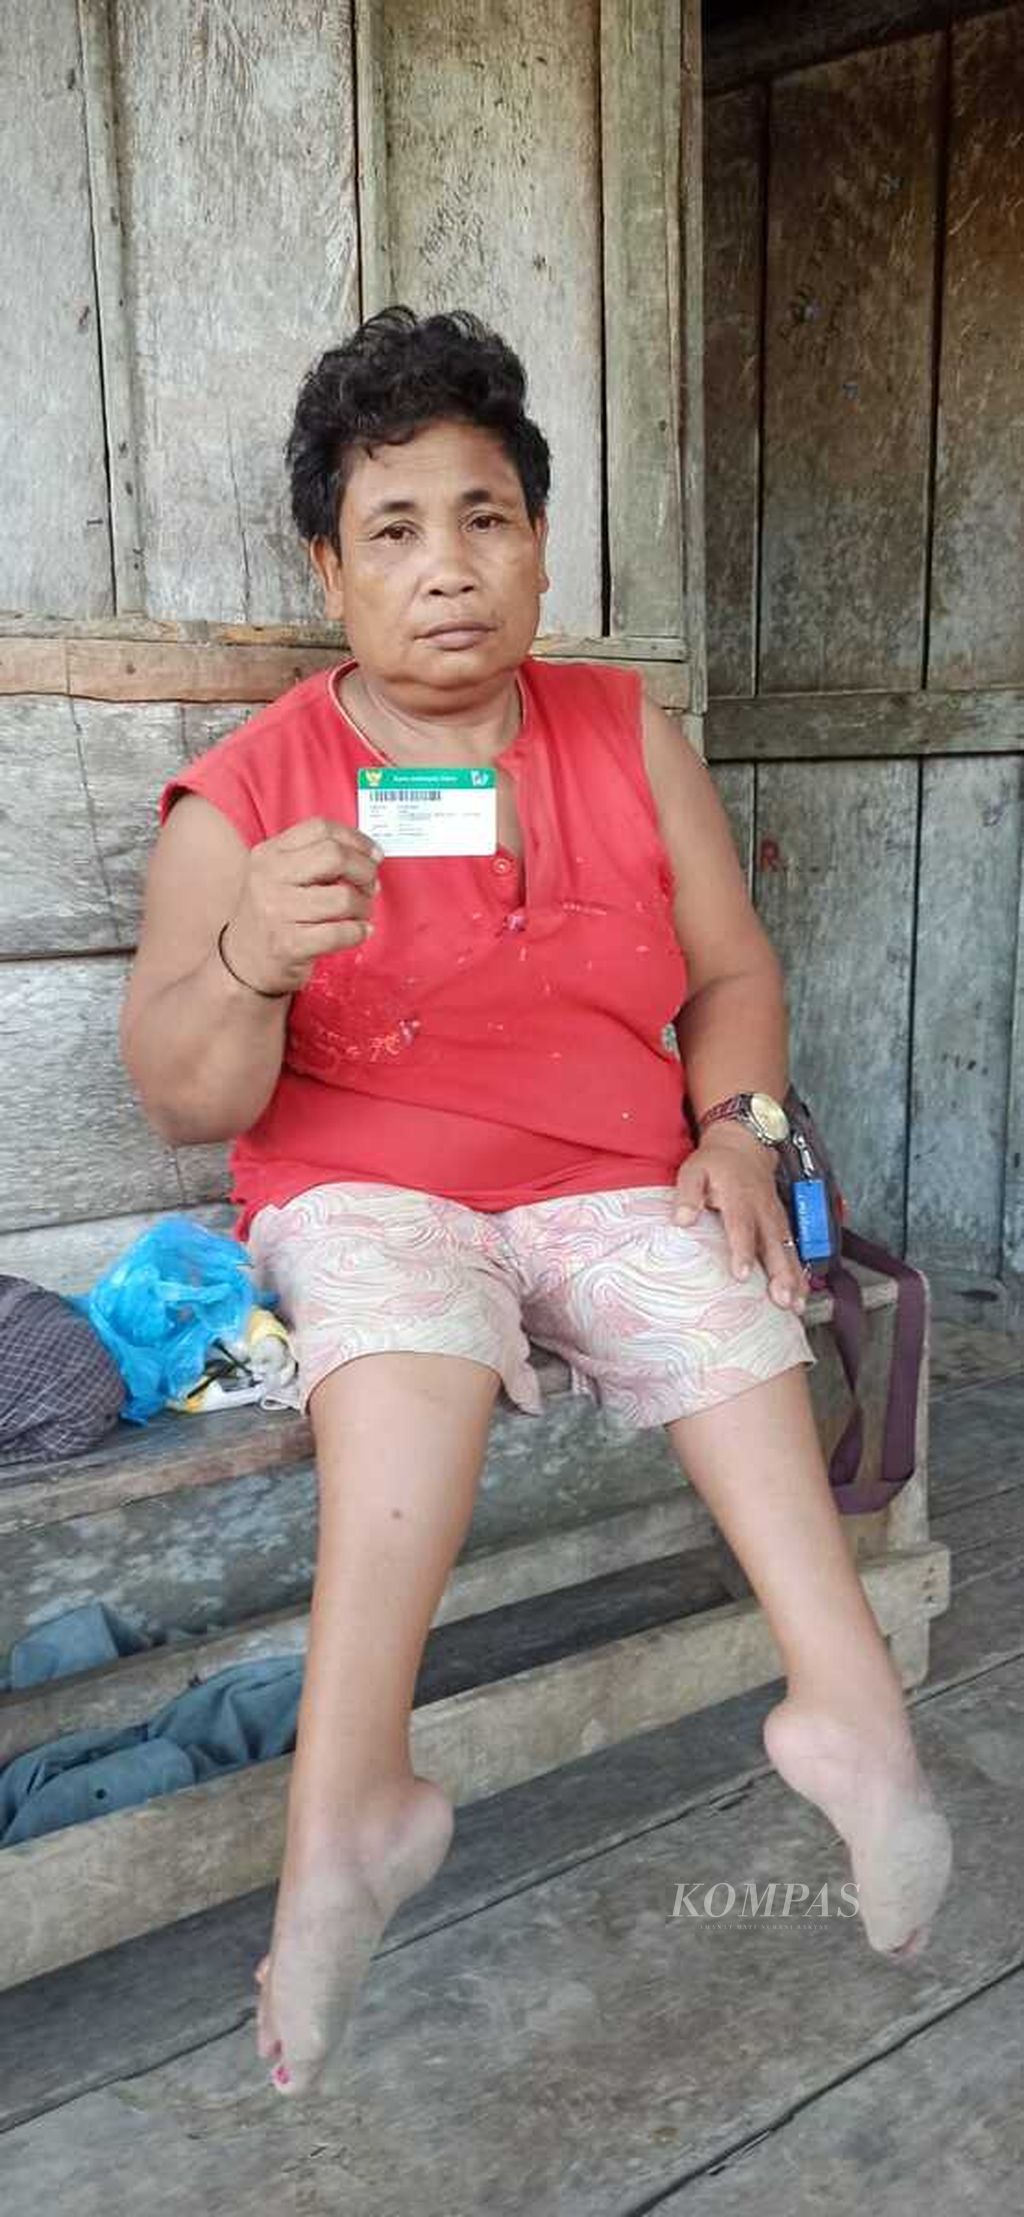 Helma Saloga (51), warga Dusun Sibeotcun, Desa Malancan, Siberut Utara. Ia lahir dengan kondisi disabilitas fisik di bagian kaki. Ketika ayah dan ibunya meninggal, hidupnya telantar. Meski diizinkan tinggal di rumah keluarganya, dia sama sekali tidak punya hak atas ladang milik keluarga ayahnya.